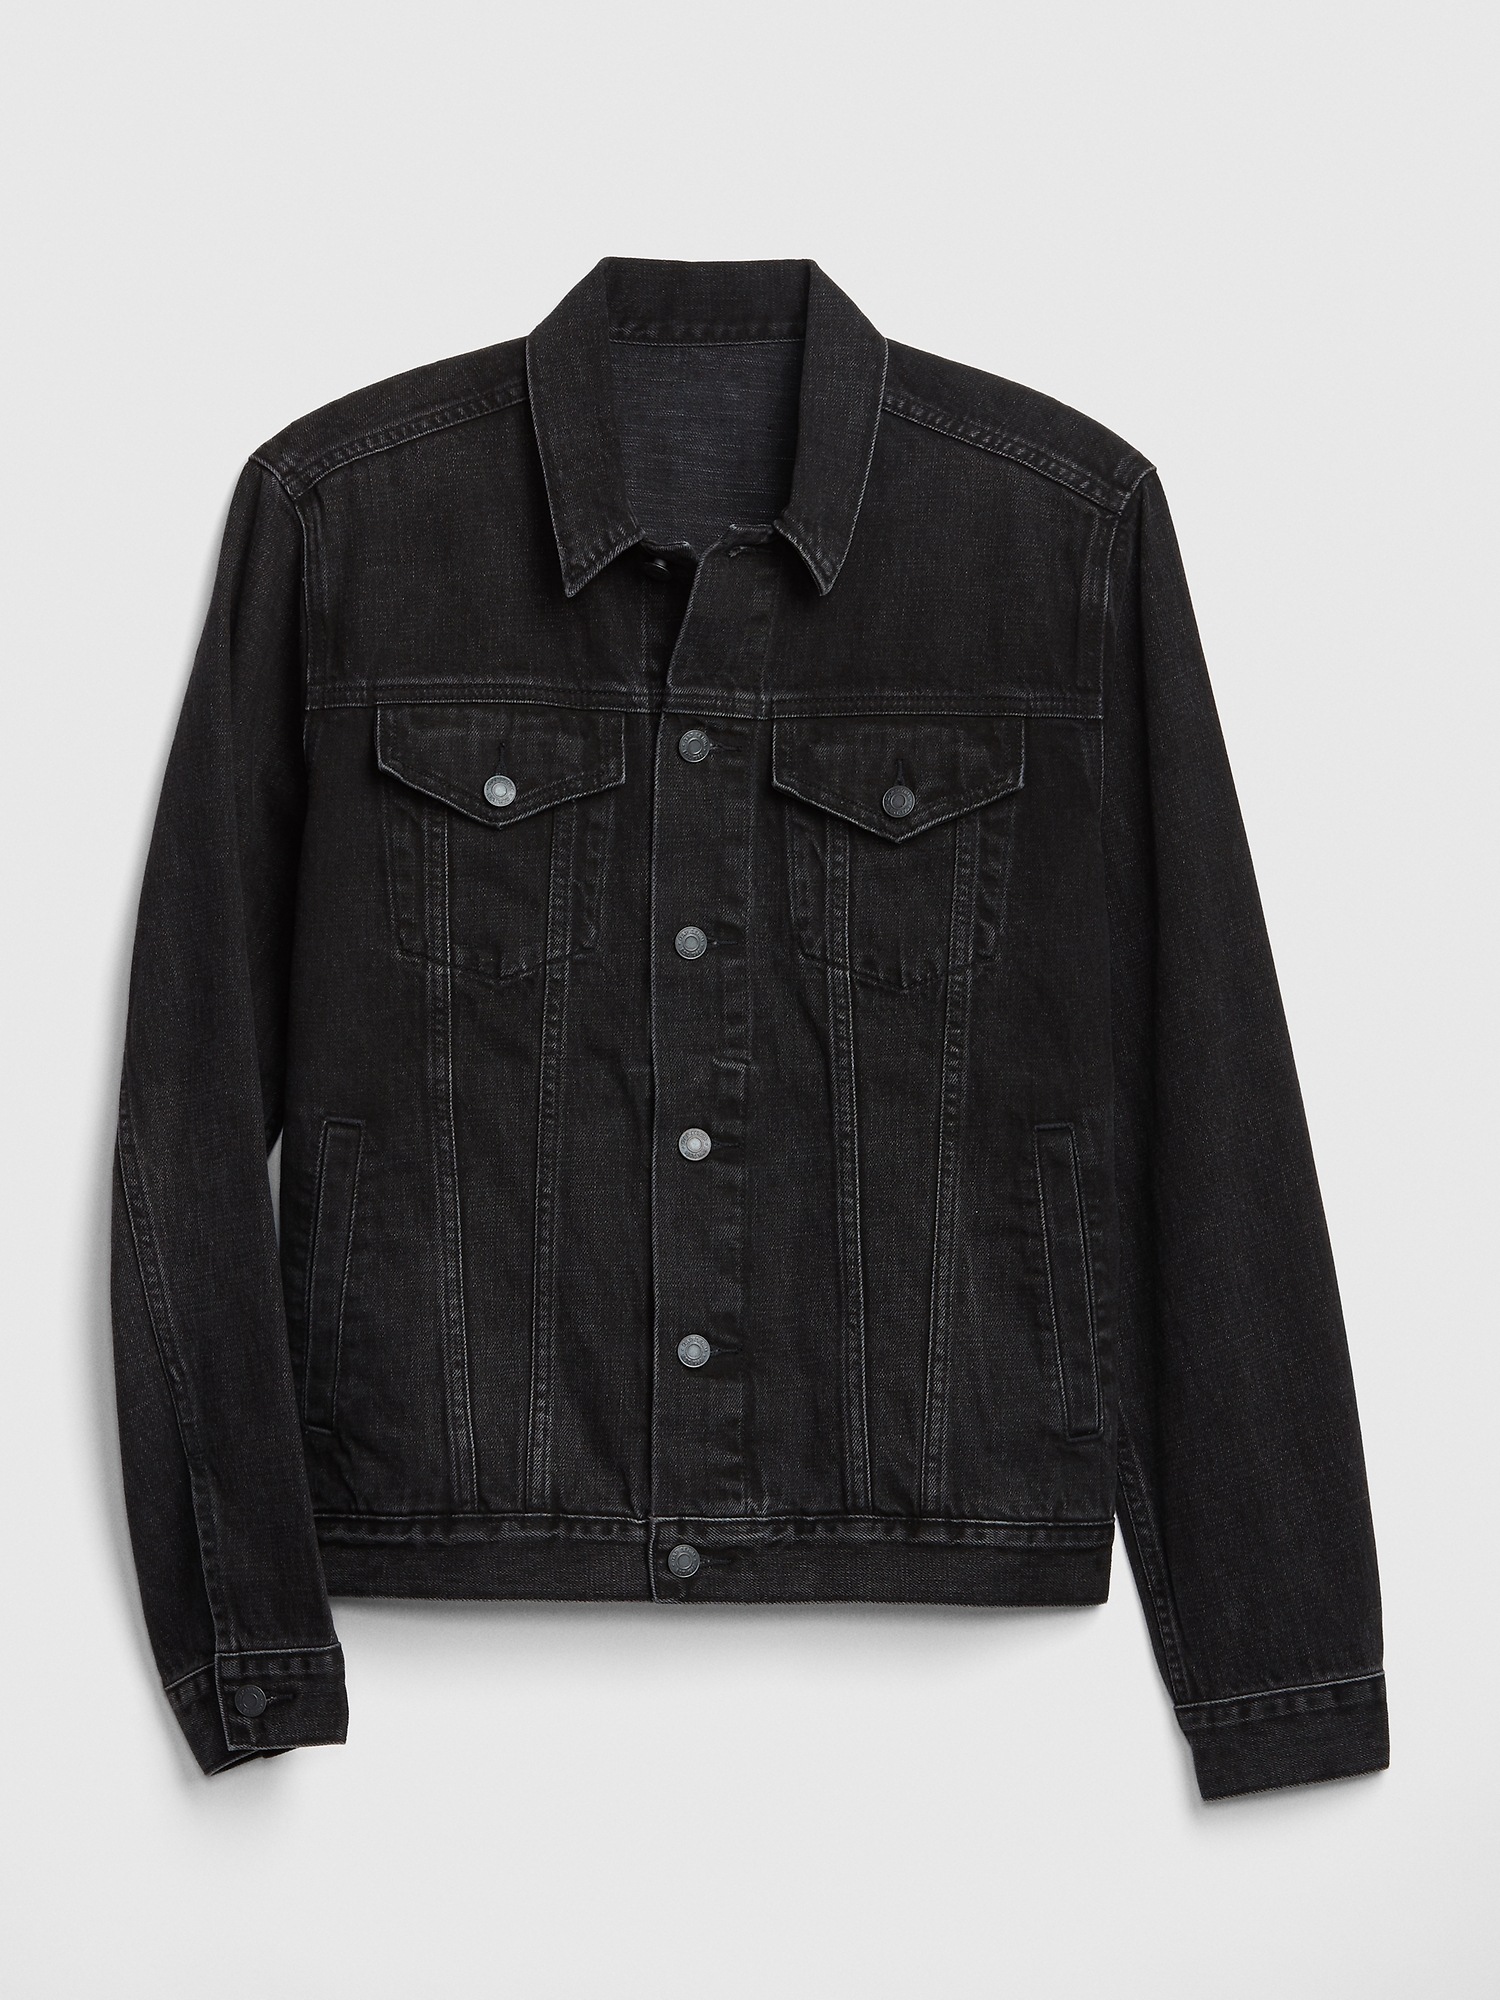 gap black denim jacket